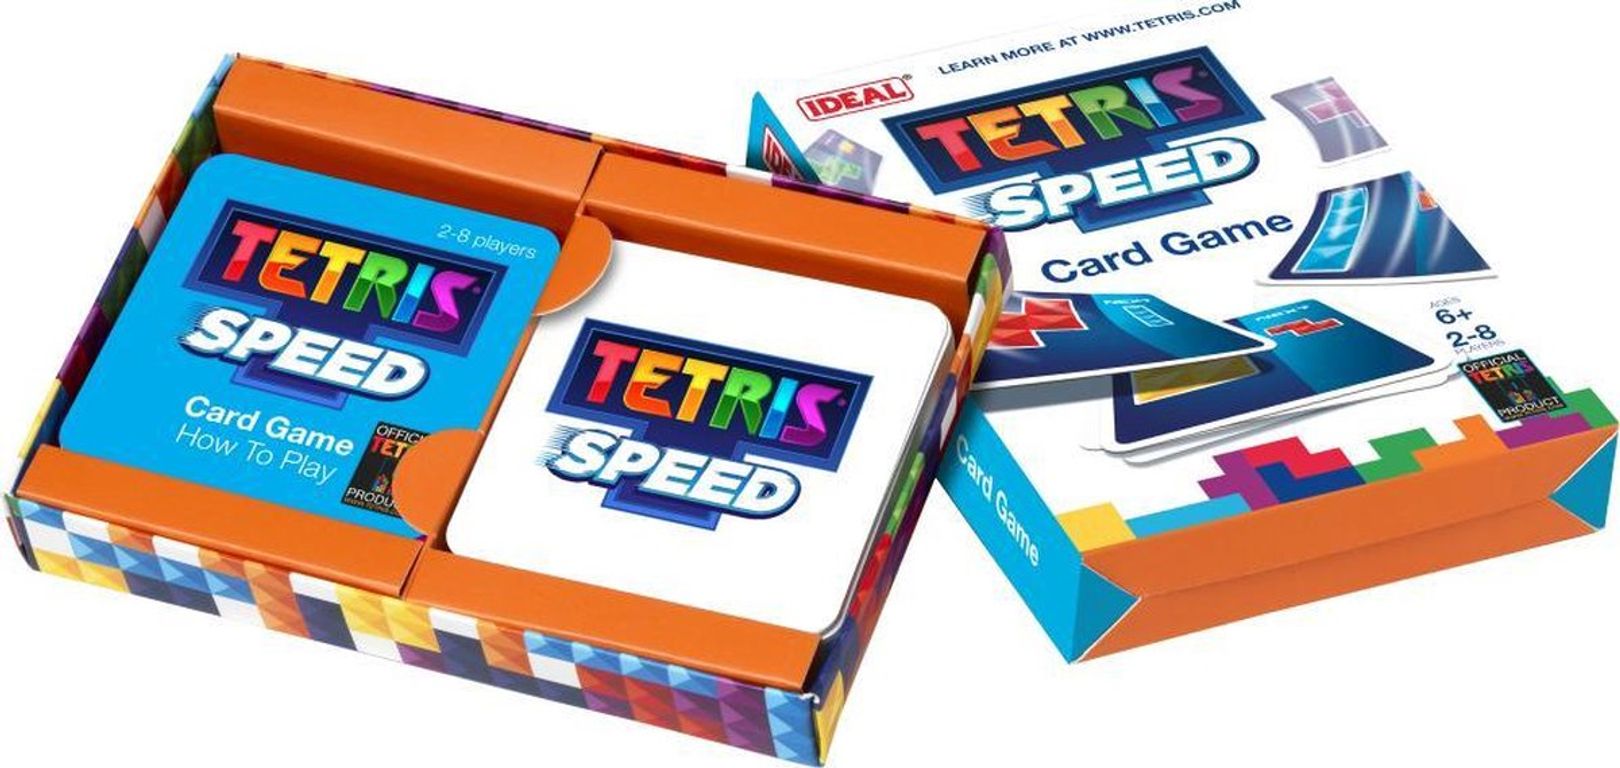 Tetris Speed partes